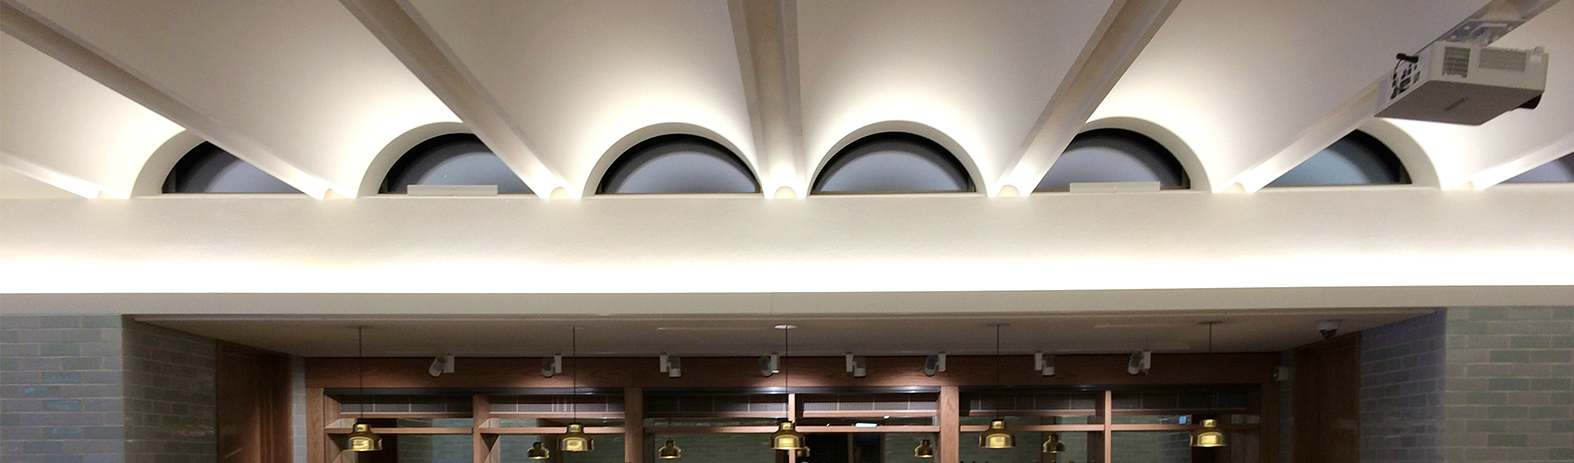 bespoke fluted ceiling